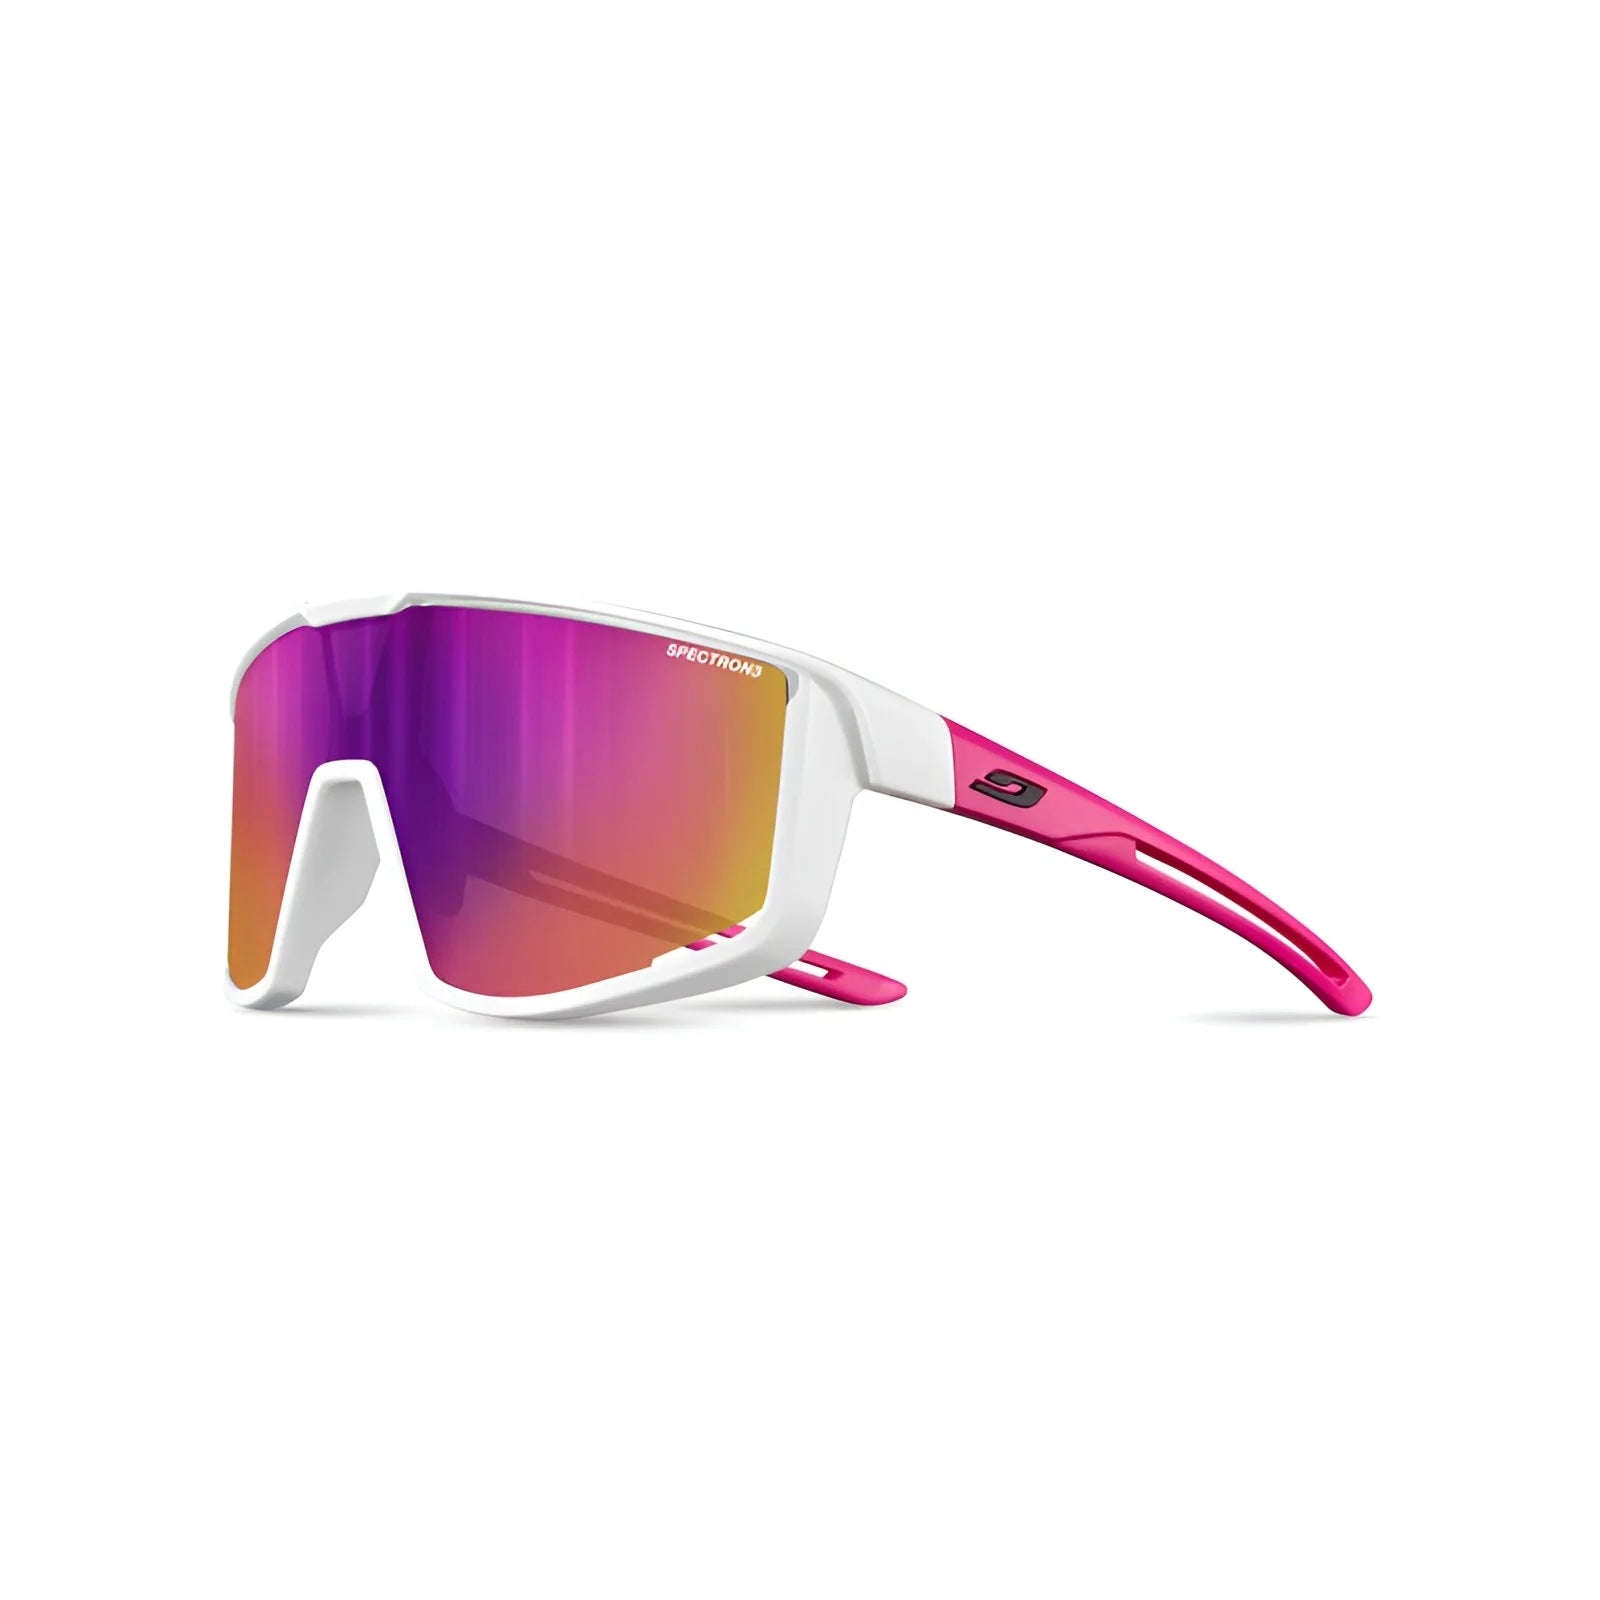 Julbo Fury S Sunglasses Shiny White / Pink / Spectron 3 (VLT 13%)